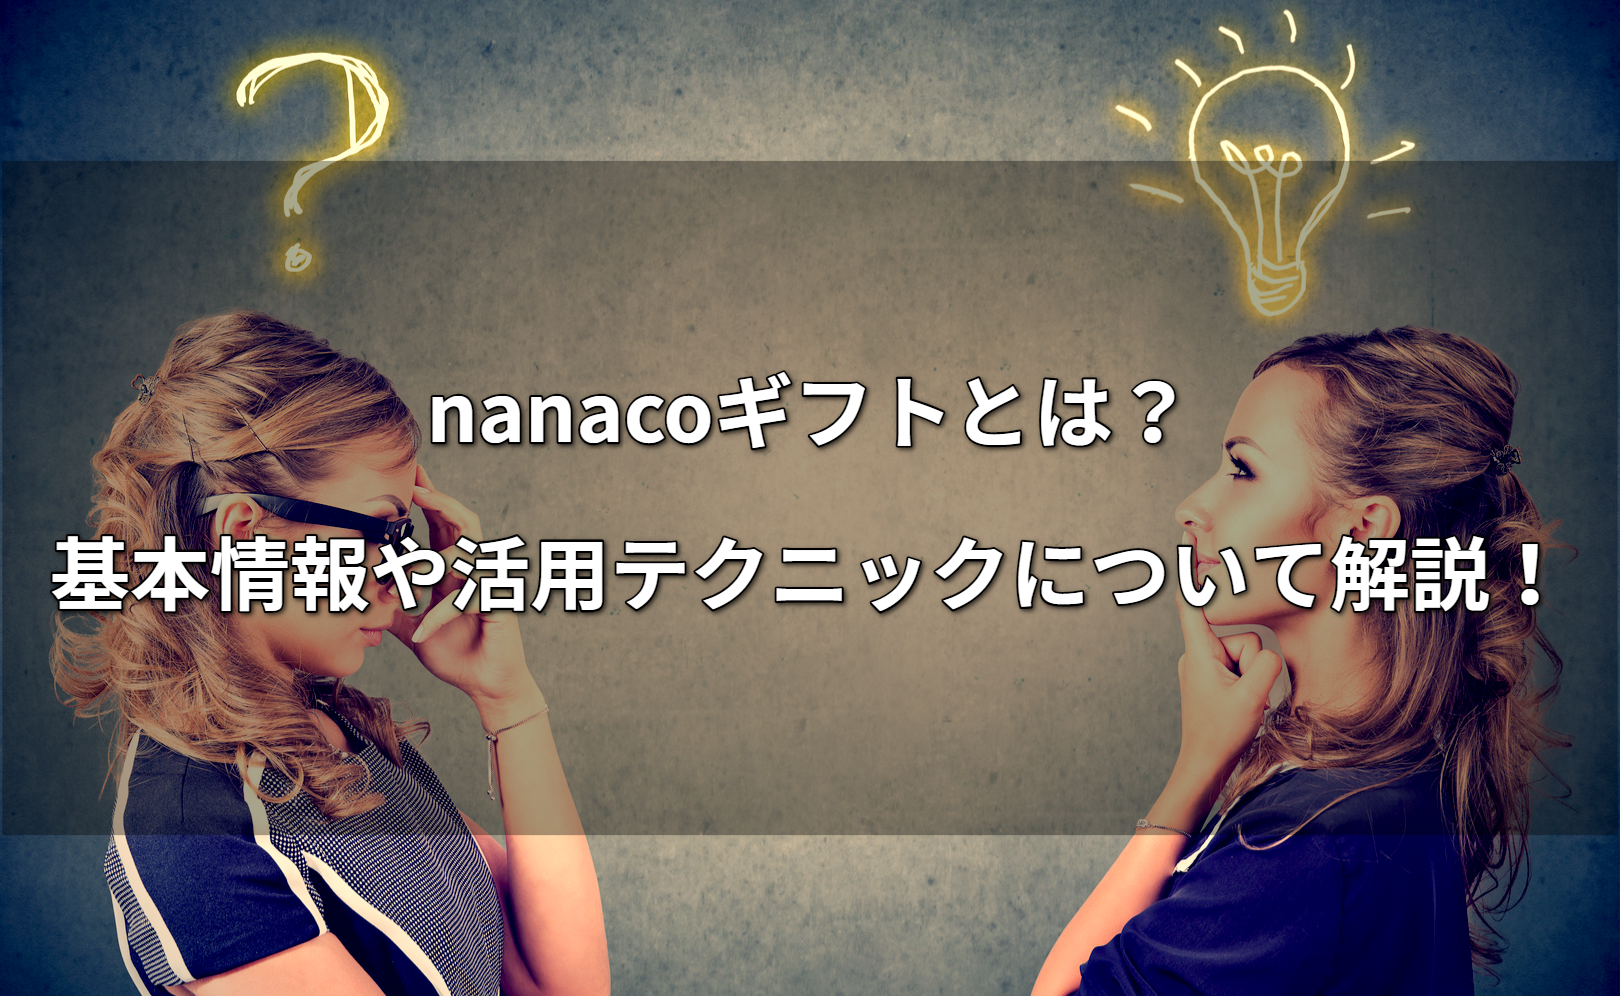 Nanacoギフトとは 基本情報や活用テクニックについて解説 公式ブログ 金券買取ex